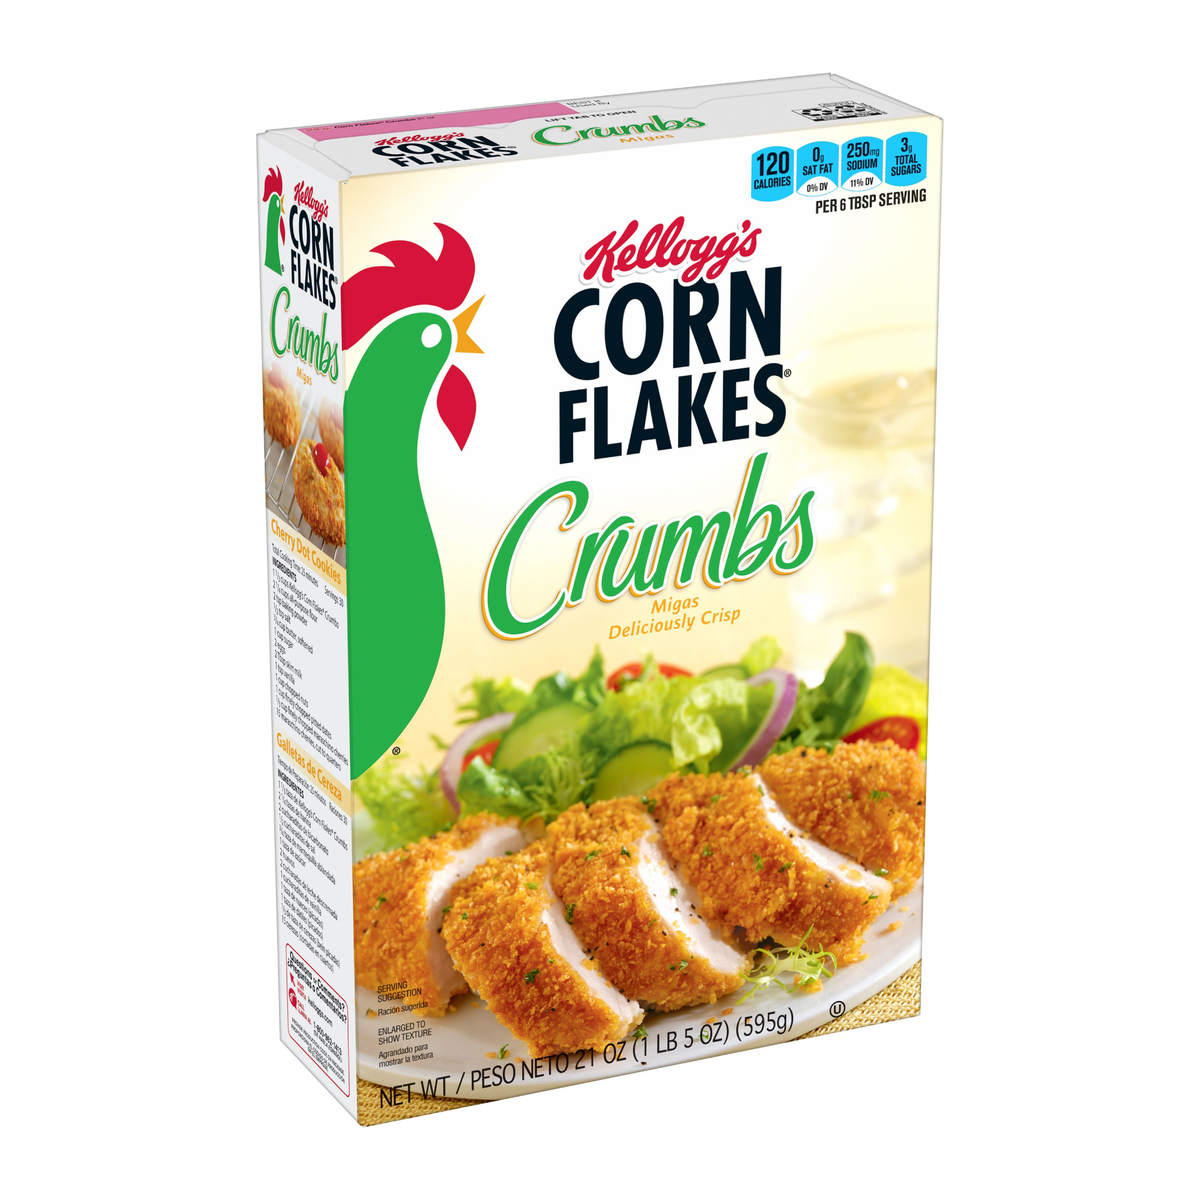 Kellogg's Corn Flakes Crumbs 595 g